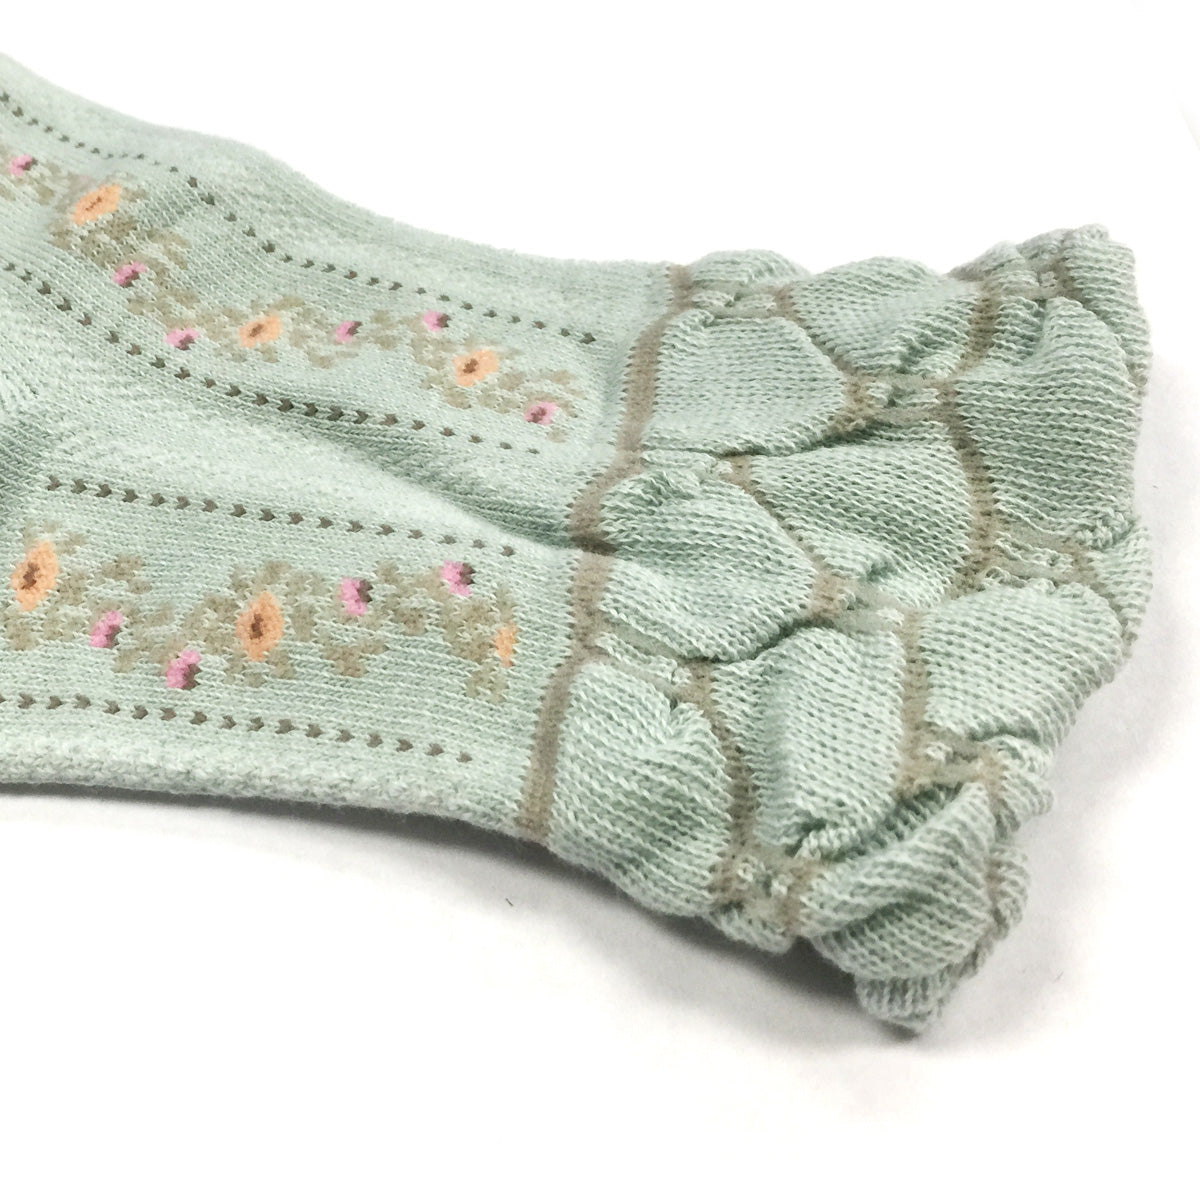 Wrapables Women's Vintage Floral Socks (Set of 3)